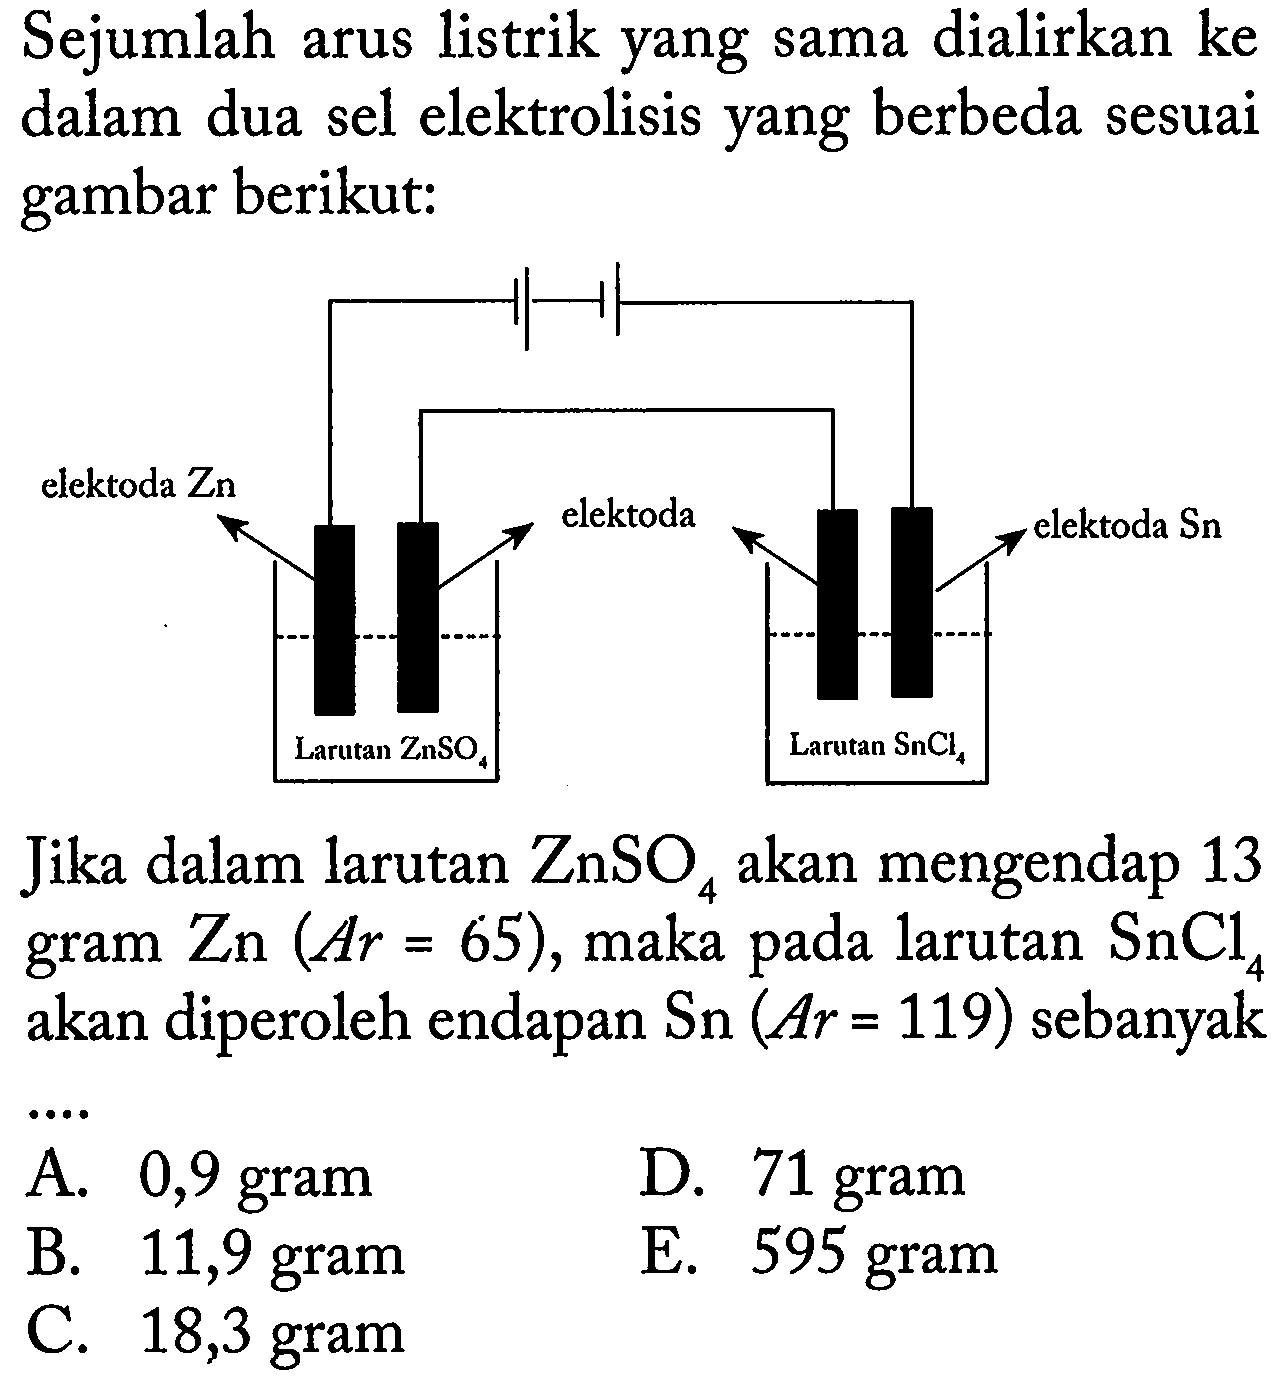 Sejumlah arus listrik yang sama dialirkan ke dalam dua sel elektrolisis yang berbeda sesuai gambar berikut:elektroda Zn elektroda elektroda Sn Larutan ZnSO4 Larutan SnCl4  Jika dalam larutan  ZnSO4  akan mengendap 13 gram  Zn(A r=65) , maka pada larutan  SnCl4  akan diperoleh endapan  Sn(A r=119)  sebanyak 